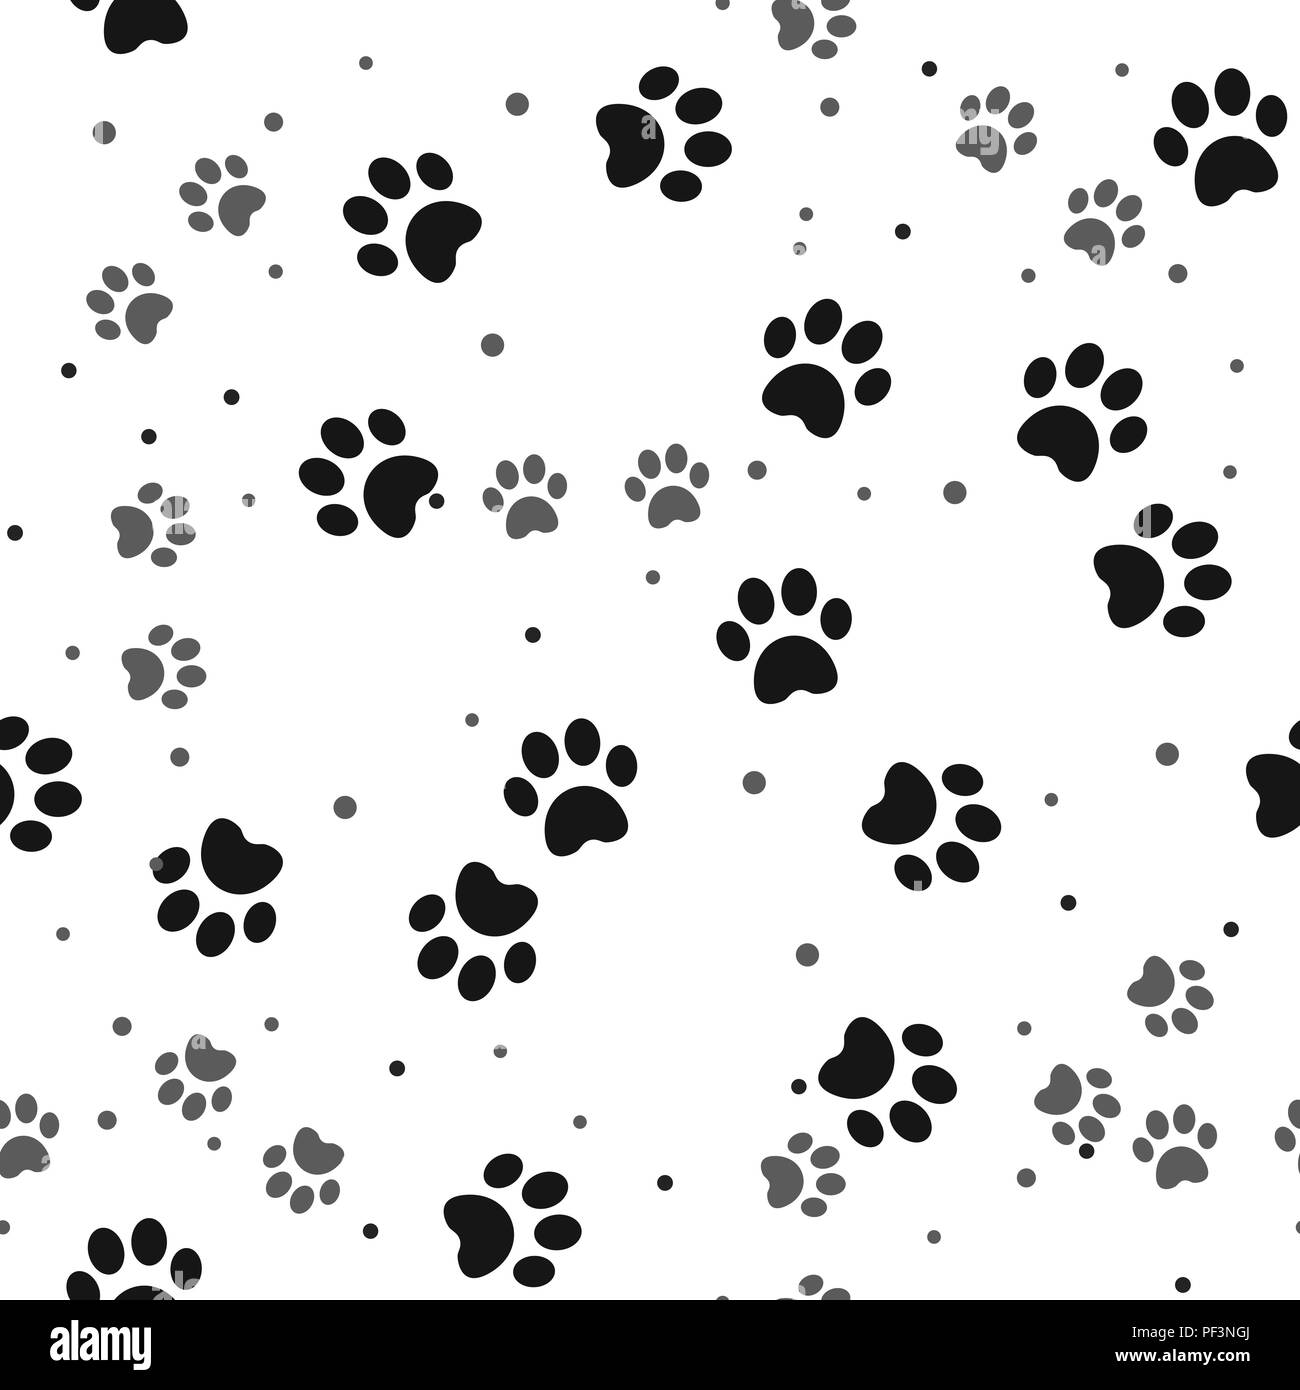 https://c8.alamy.com/comp/PF3NGJ/dog-paw-print-seamless-pattern-on-white-background-eps10-PF3NGJ.jpg